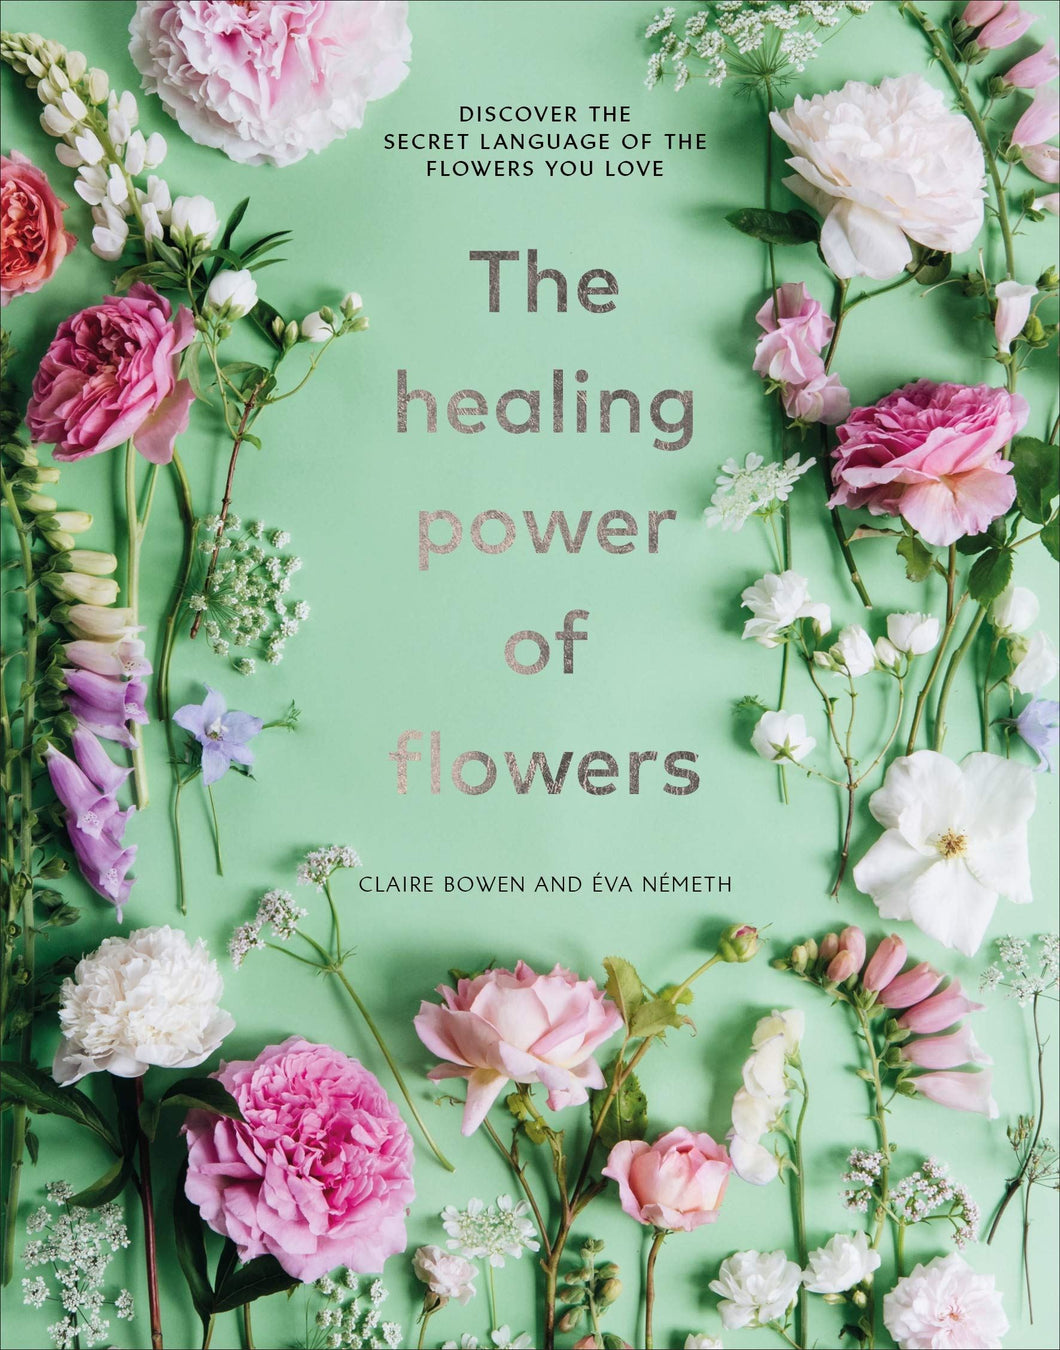 The Healing Power Of Flowers by Claire Bowen & Eva Nemeth